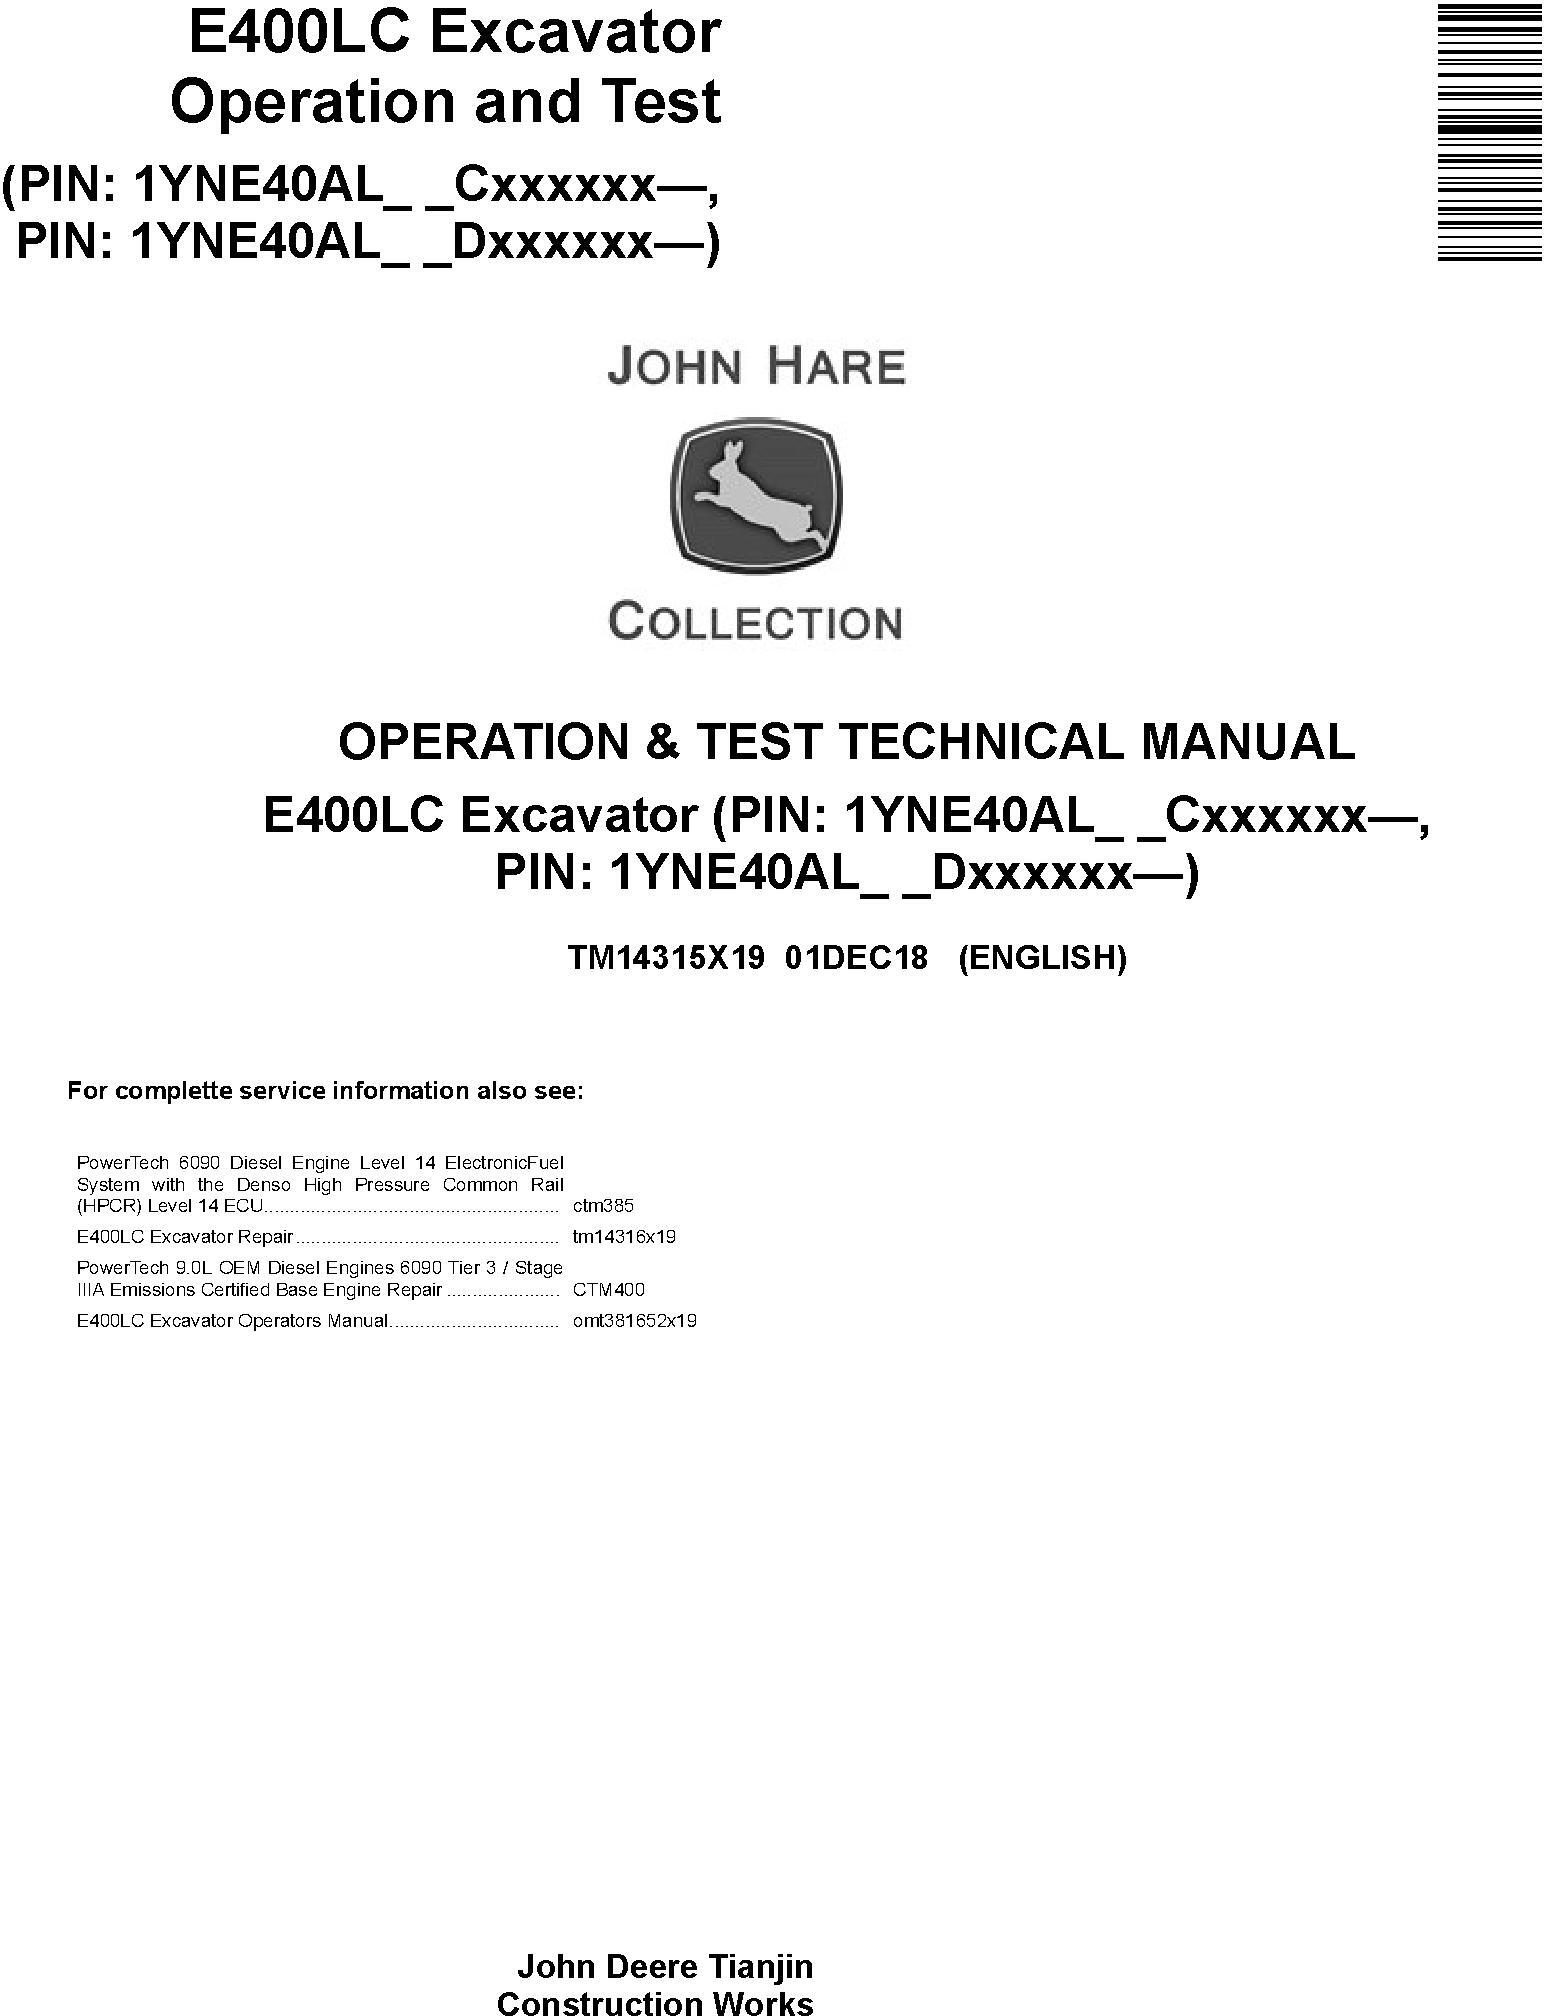 John Deere E400LC Excavator Operation Test Technical Manual TM14315X19